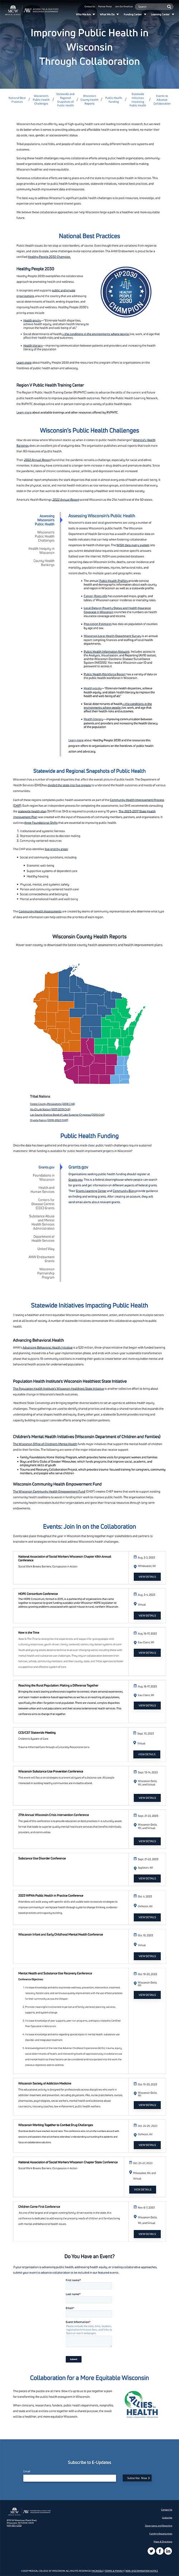 AHW-Pillar-improving-public-health-in-wisconsin-through-collaboration